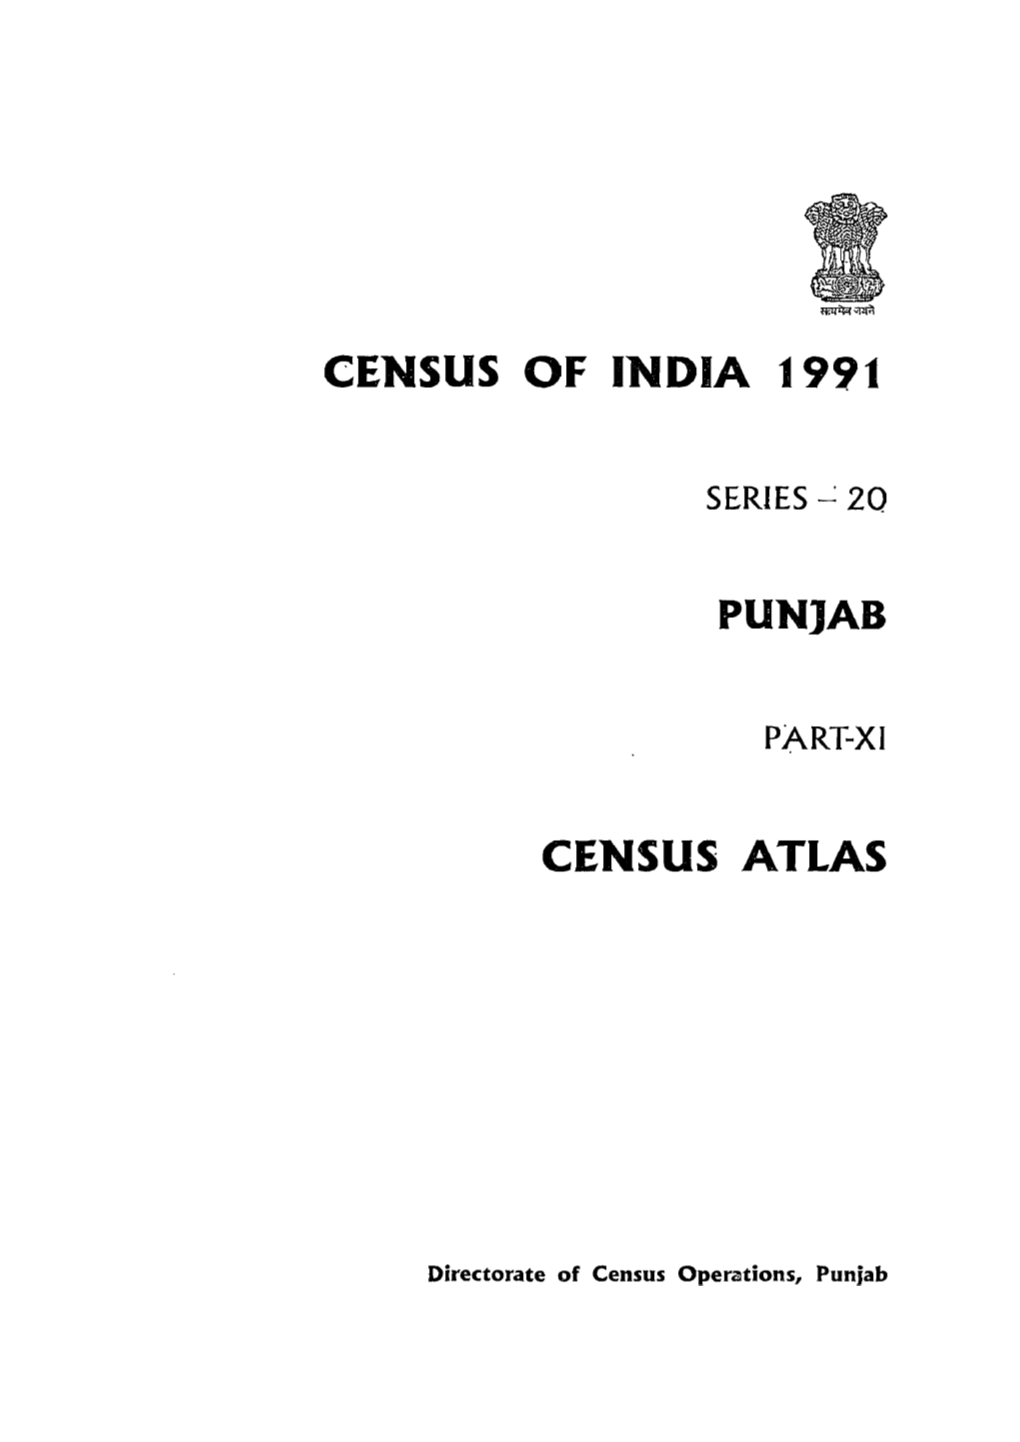 Census Atlas, Part-XI, Series-20, Punjab